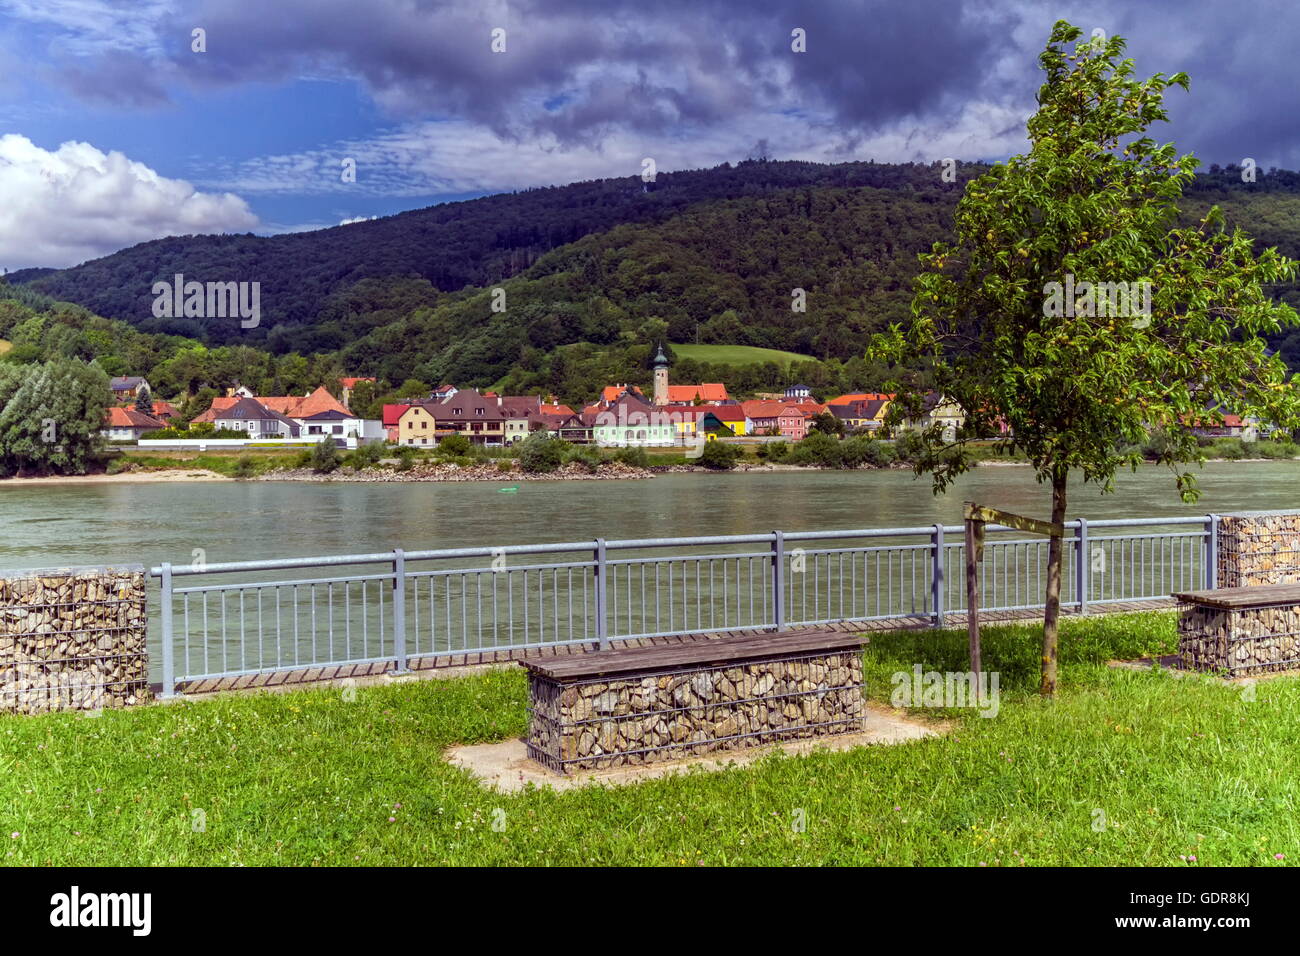 Village of Willendorf on the river Danube in the Wachau region by day, Austria Stock Photo